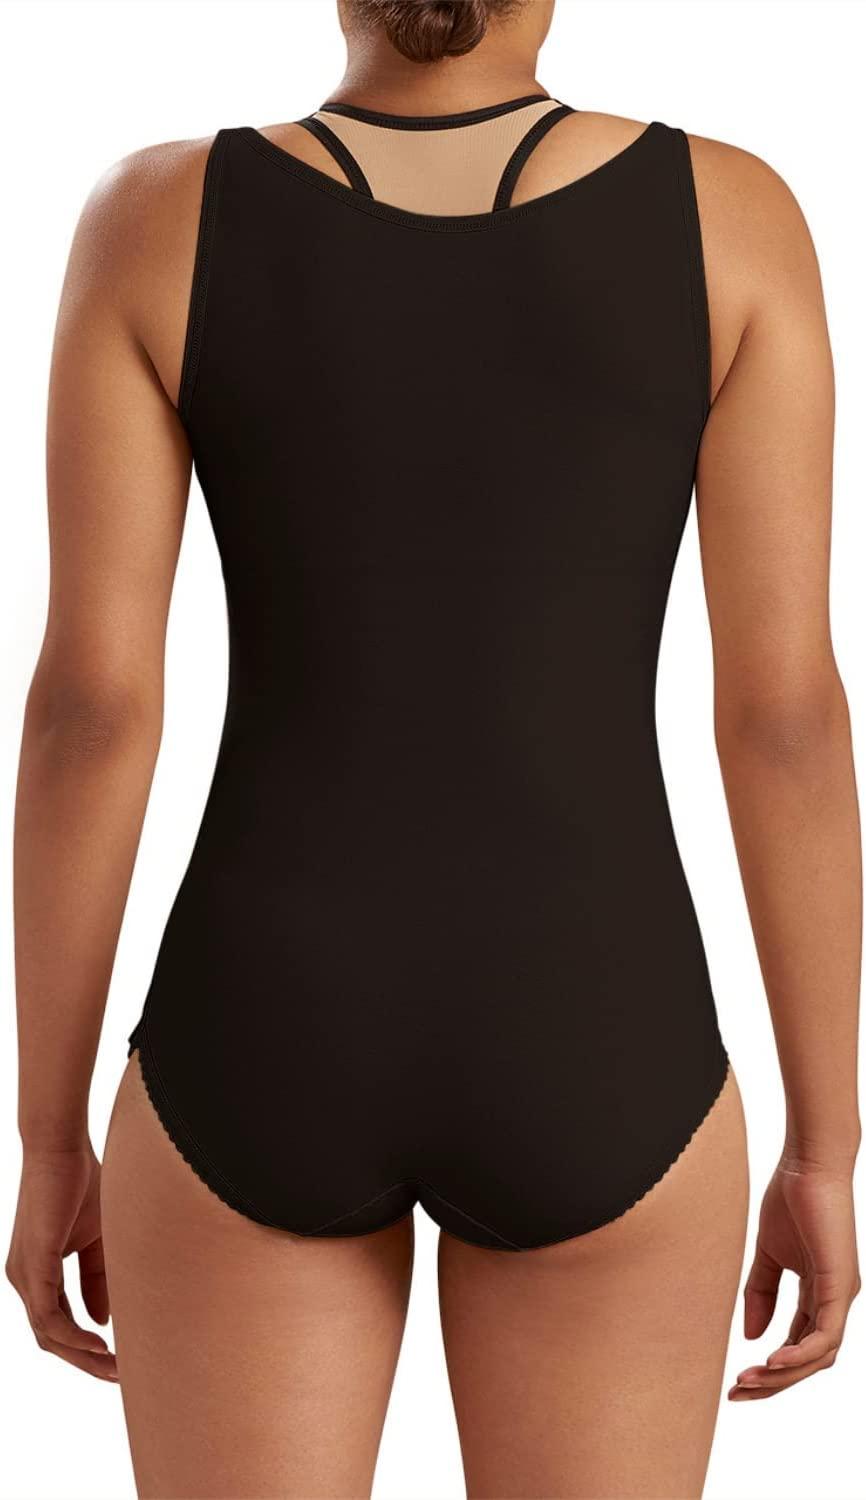 Marena ComfortWear Compression and Support Garment Black Bodysuit Men's  Size XL